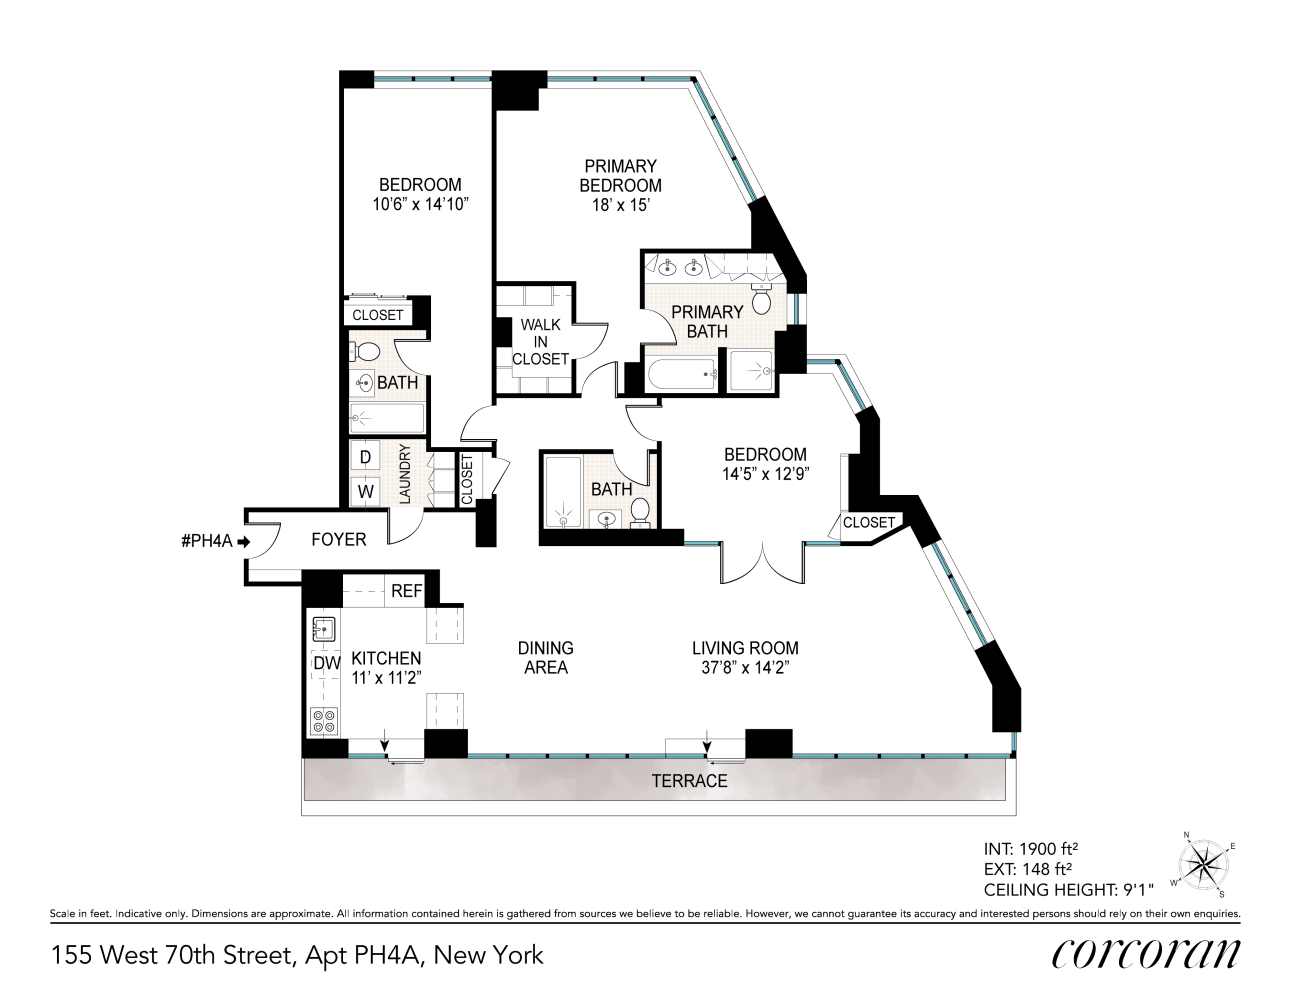 Floorplan for 155 West 70th Street, PH4A